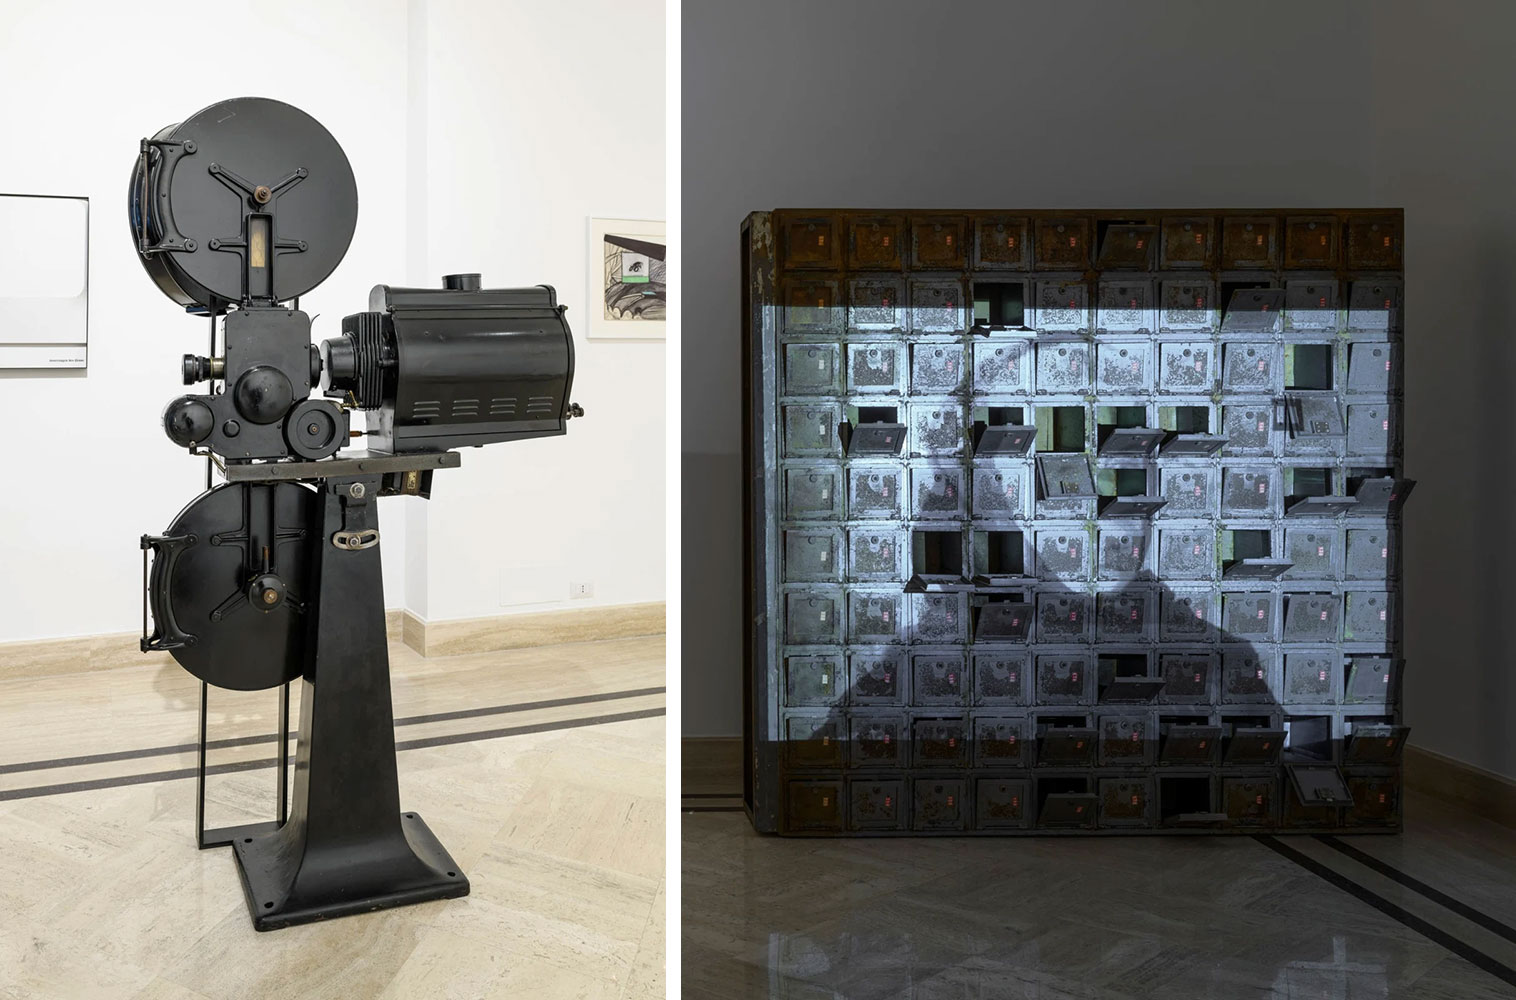 Left: Fabio Mauri, Pittura [Painting], 1986/1996, Film projector, wooden frame, canvas, 209.9 x 109.9 x 49.8 cm, Installation overall: 186.69 x 114.3 x 81.28 cm, Courtesy Richard Saltoun GalleryRight: Fabio Mauri, Rebibbia, 2006, Iron cabinet with projection of "Ballad of a Soldier" by Grigori Chukhrai; pedestal, A/V equipment, projector, Installation overall: 190.5 x 482.6 x 197.5 cm, Iron cabinet: 190.5 x 198.12 x 43.18 cm, Projector: 102.87 x 23.8 x 23.495 cm, Ped: 101.6 x 23.49 x 23.49 cm, Edition 1 of 2, Courtesy Richard Saltoun Gallery 